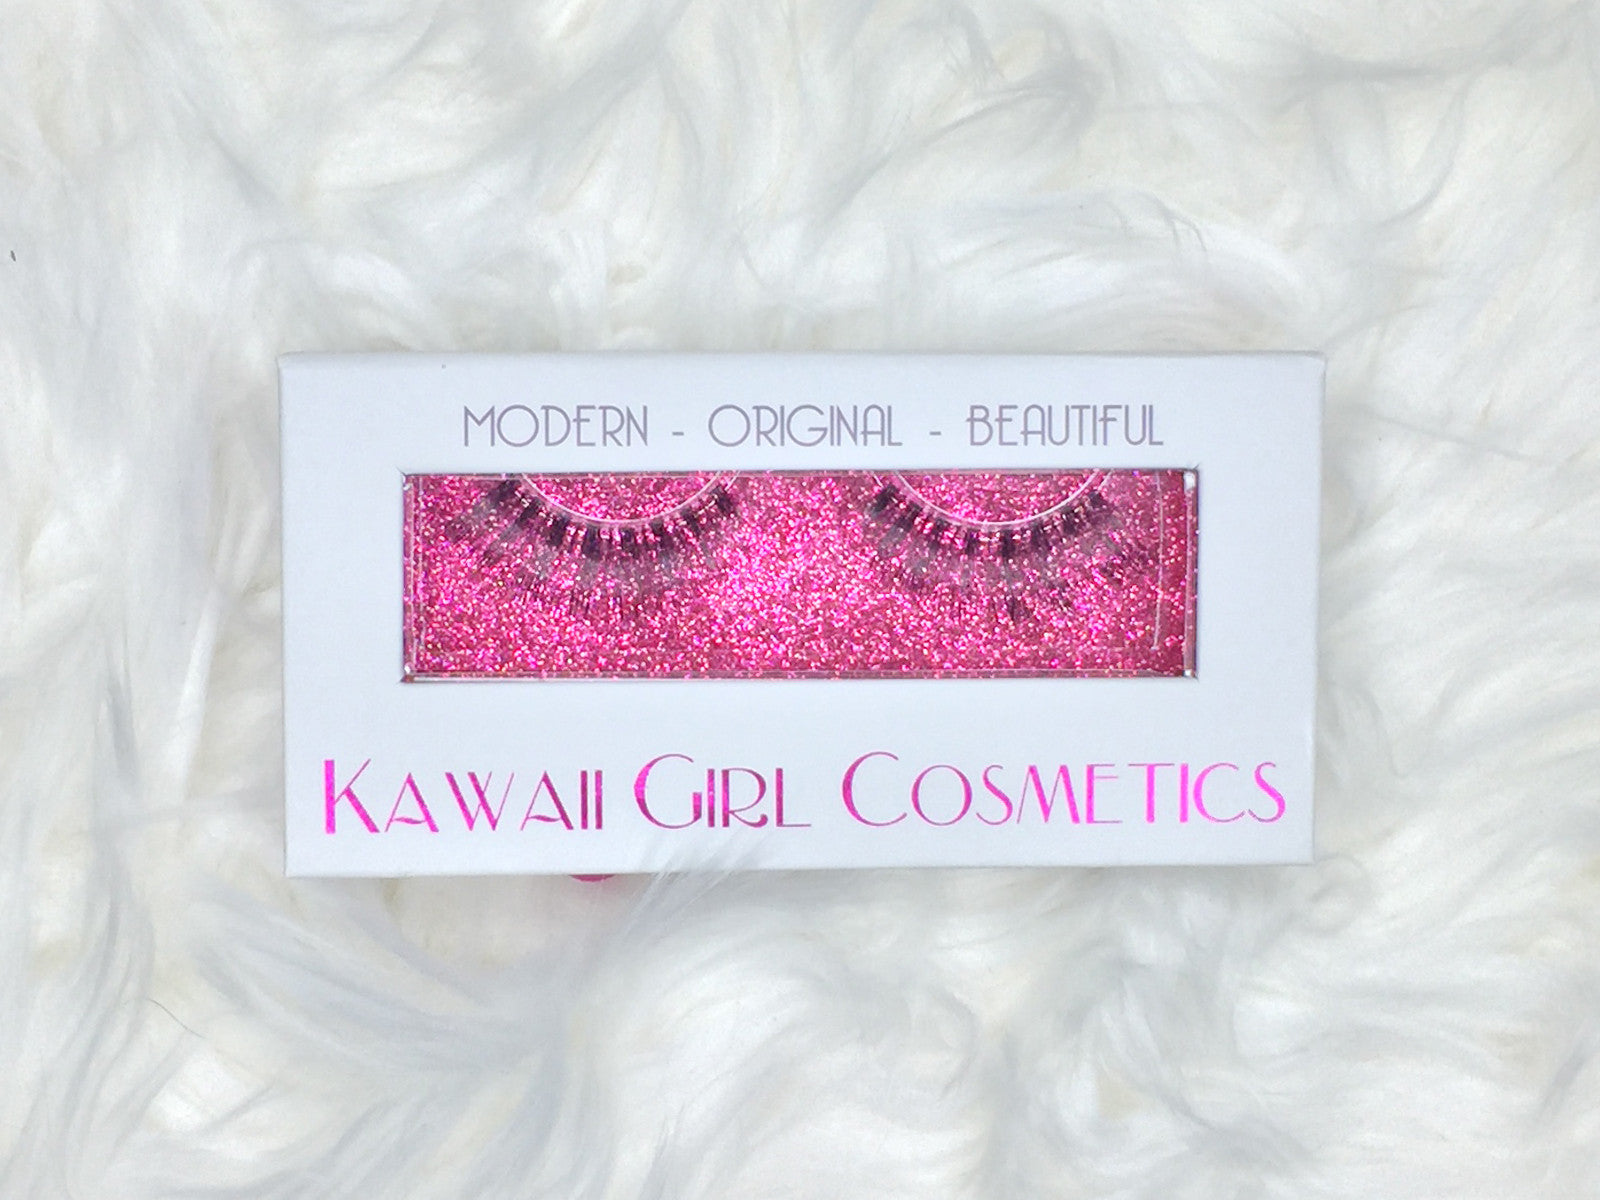 Roppongi - Kawaii Girl Cosmetics